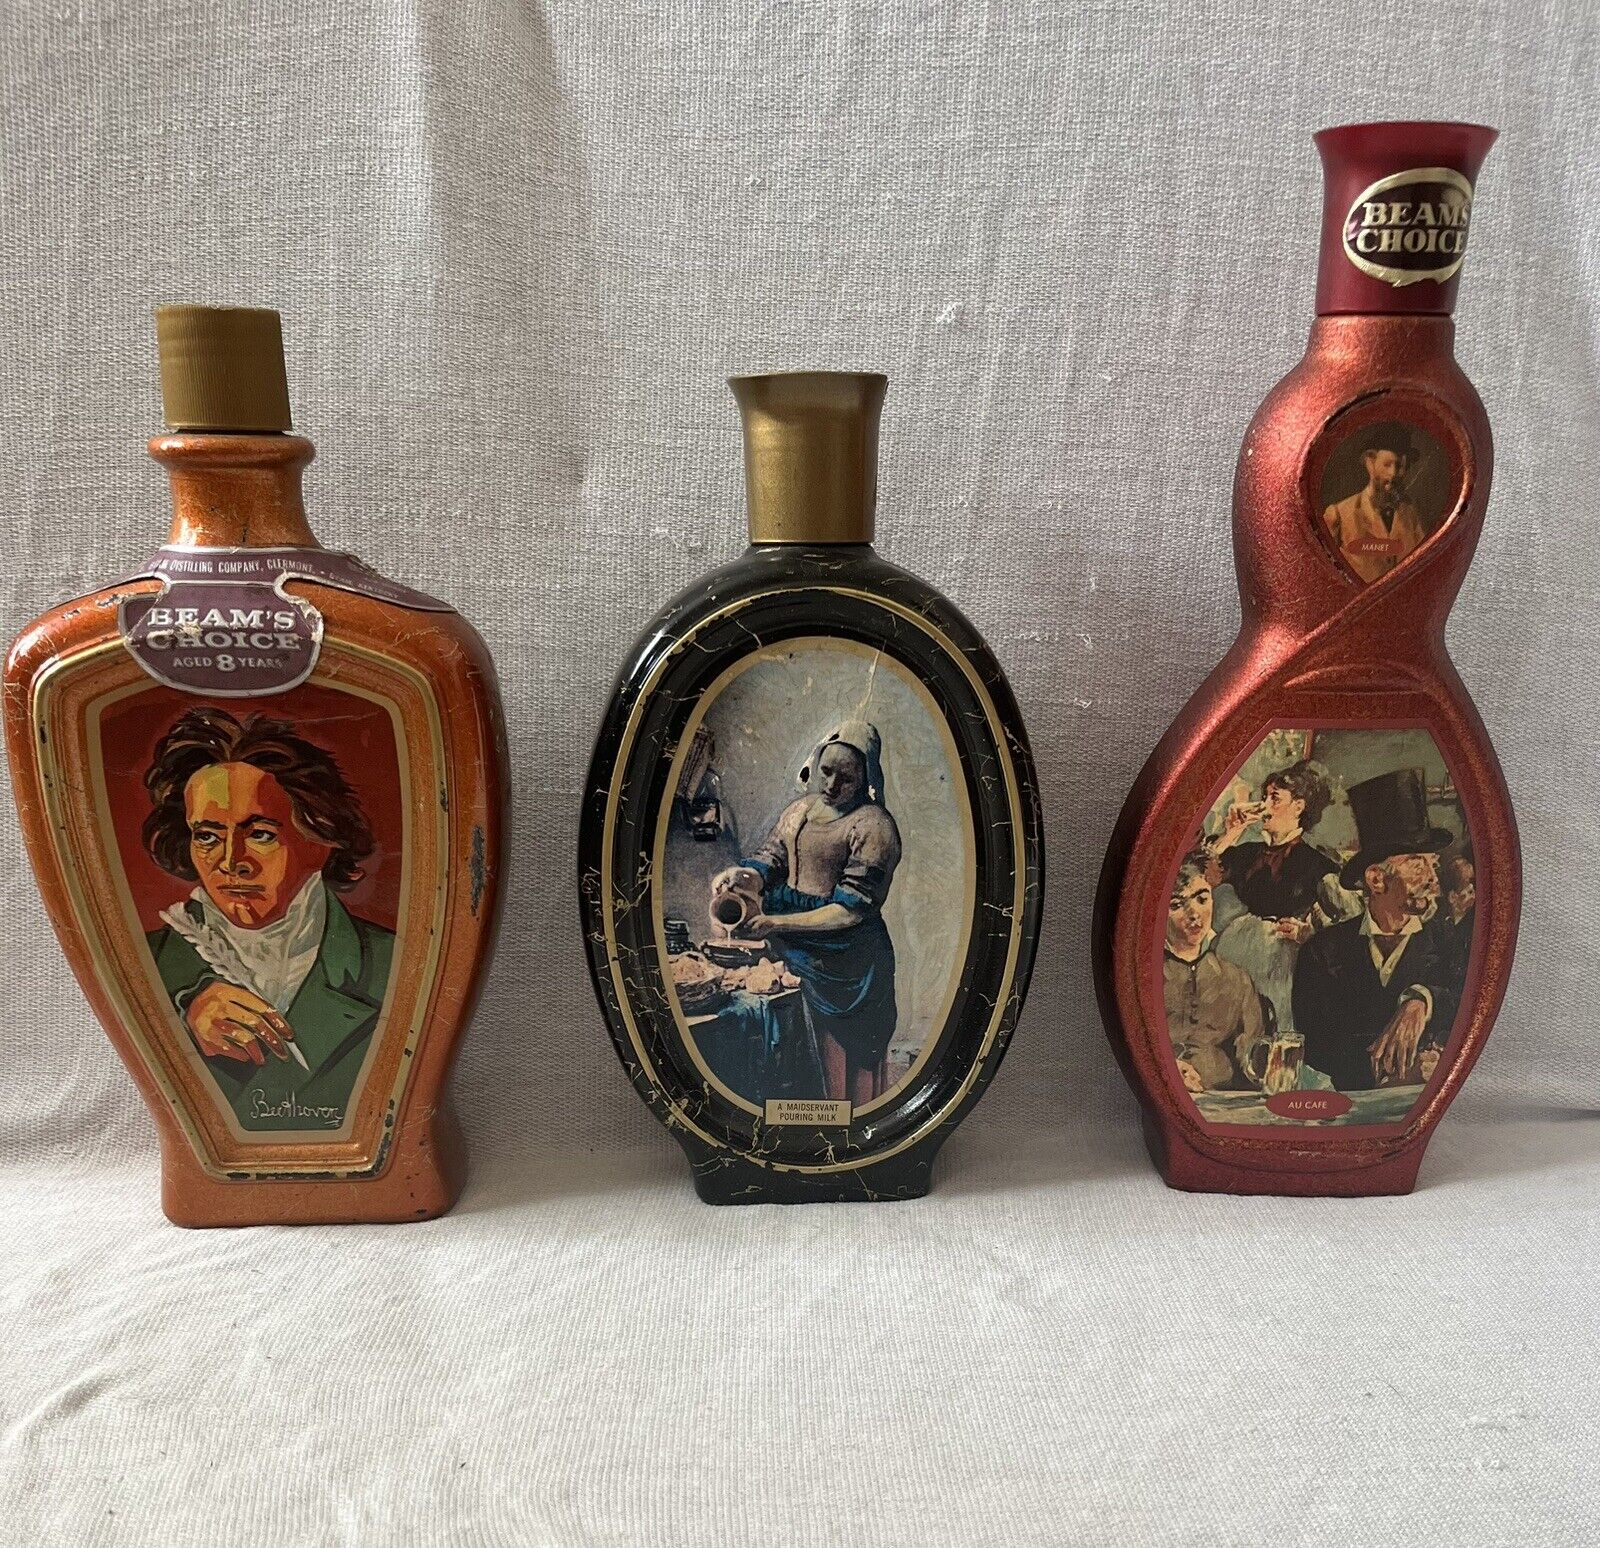 💥 Vintage Jim Beam/Beam's Choice Glass Decanter Bottles Lot of 3